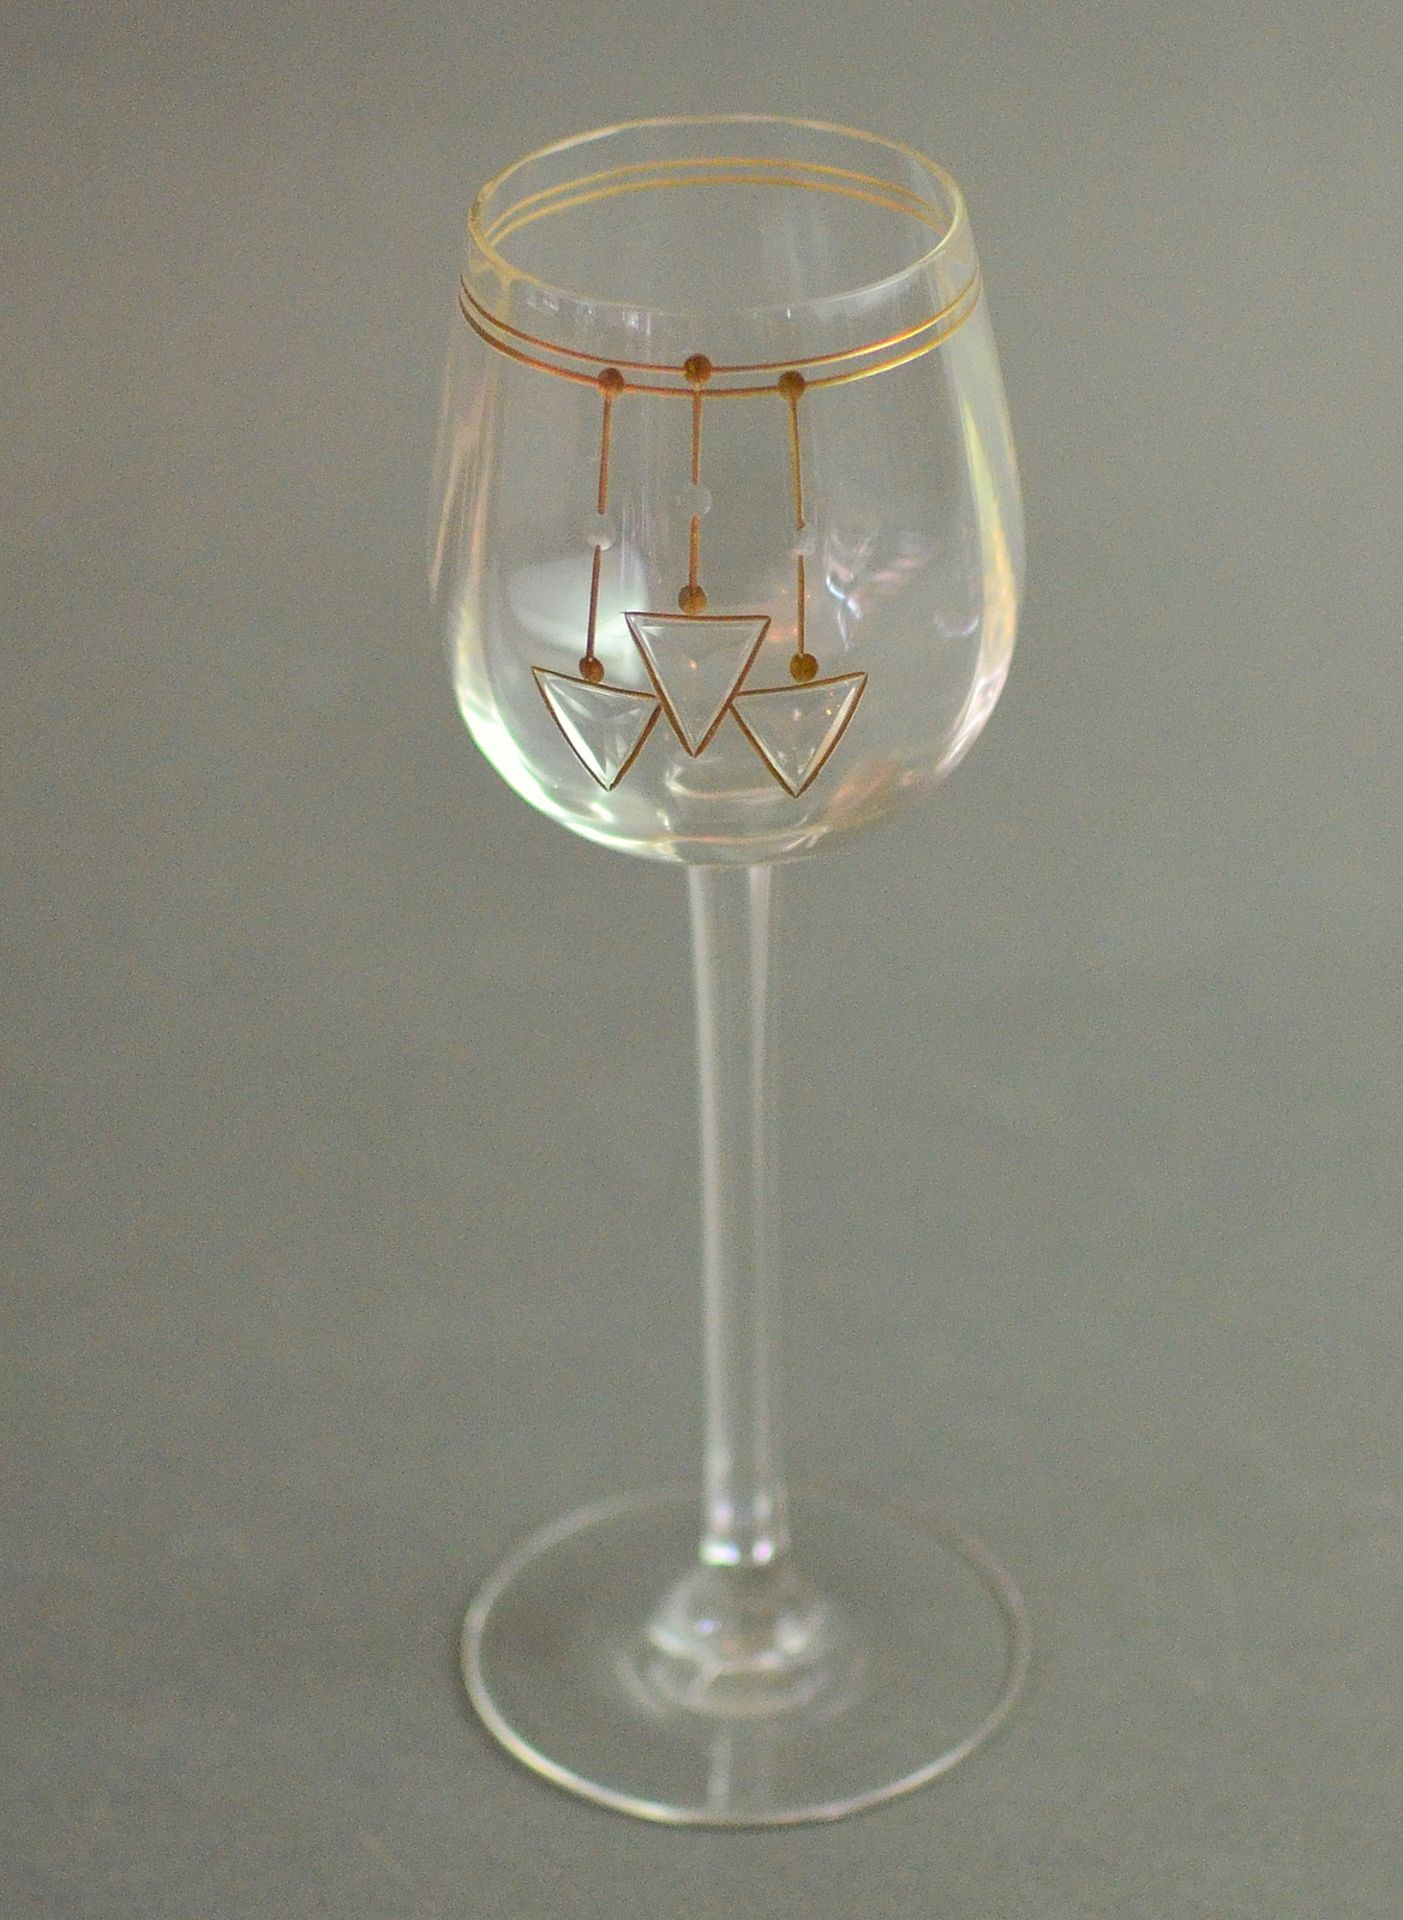 Jugendstil-Stängelglas, Moser oder Theresienthal um 1900, elegantes langstieliges Weinglas, - Bild 2 aus 3